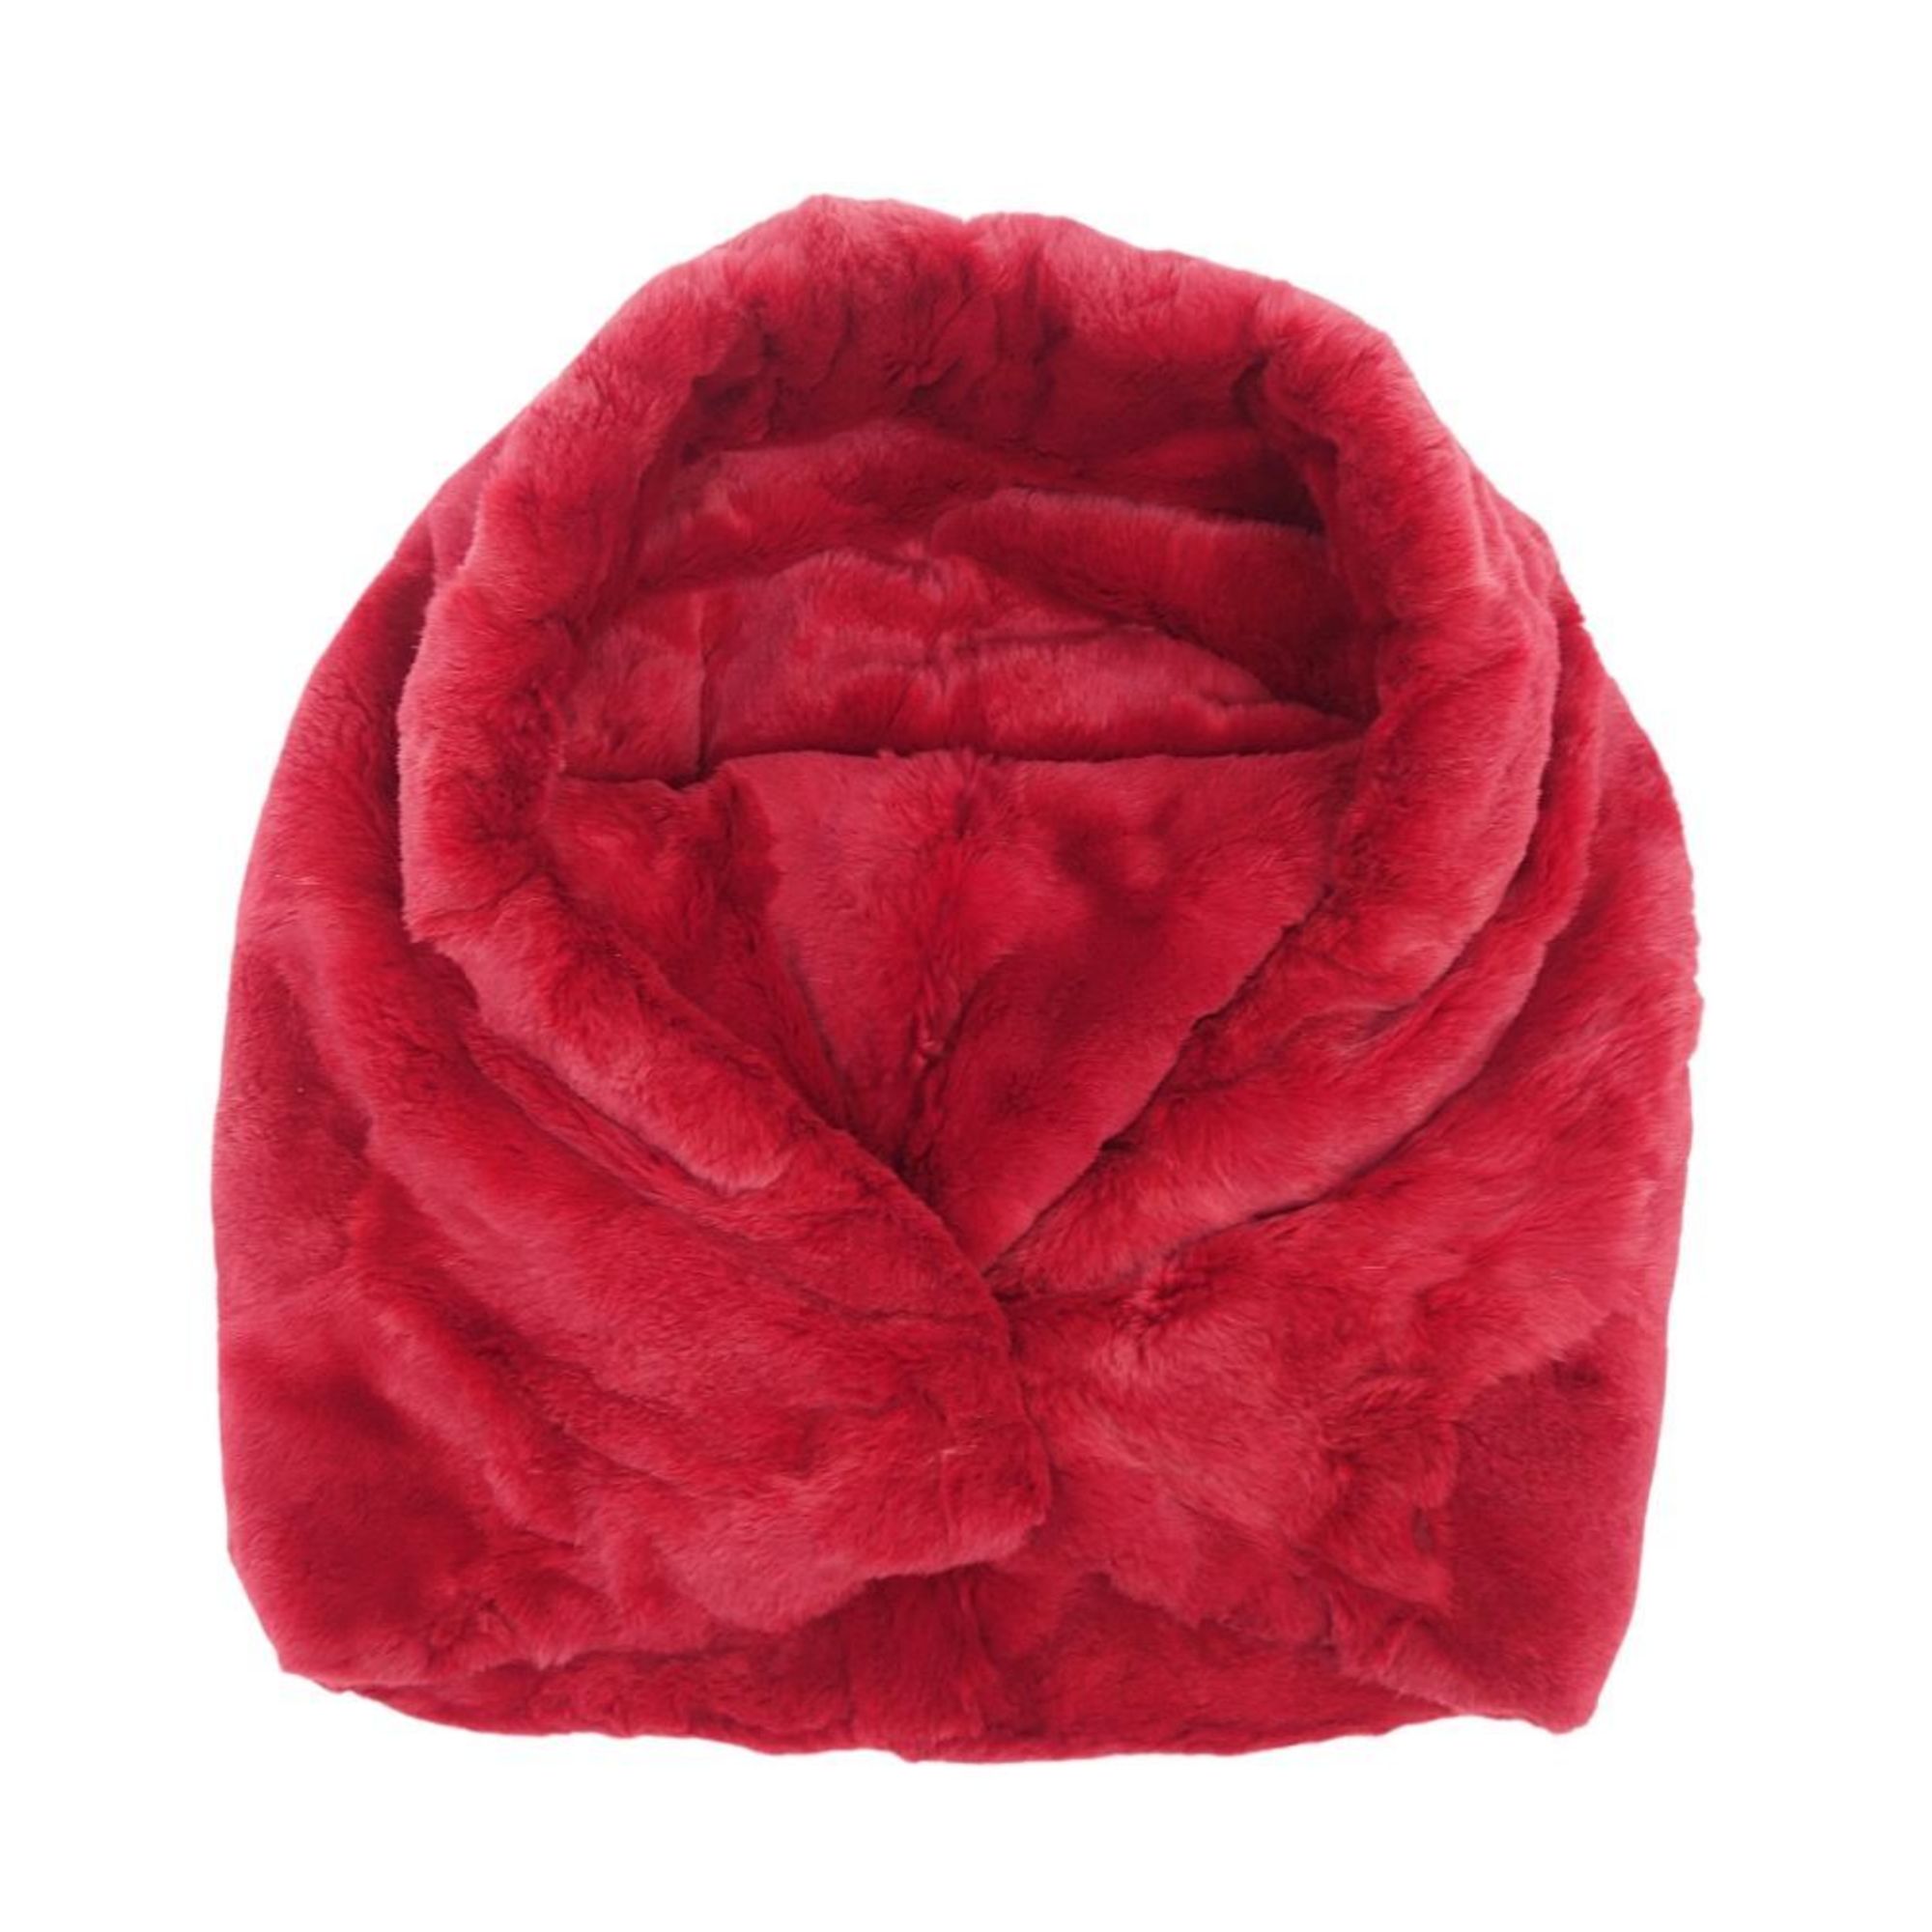 Dolce & Gabbana DOLCE&GABBANA Snood Scarf Stole Weasel Fur Women's UNICA (Free Size) Red